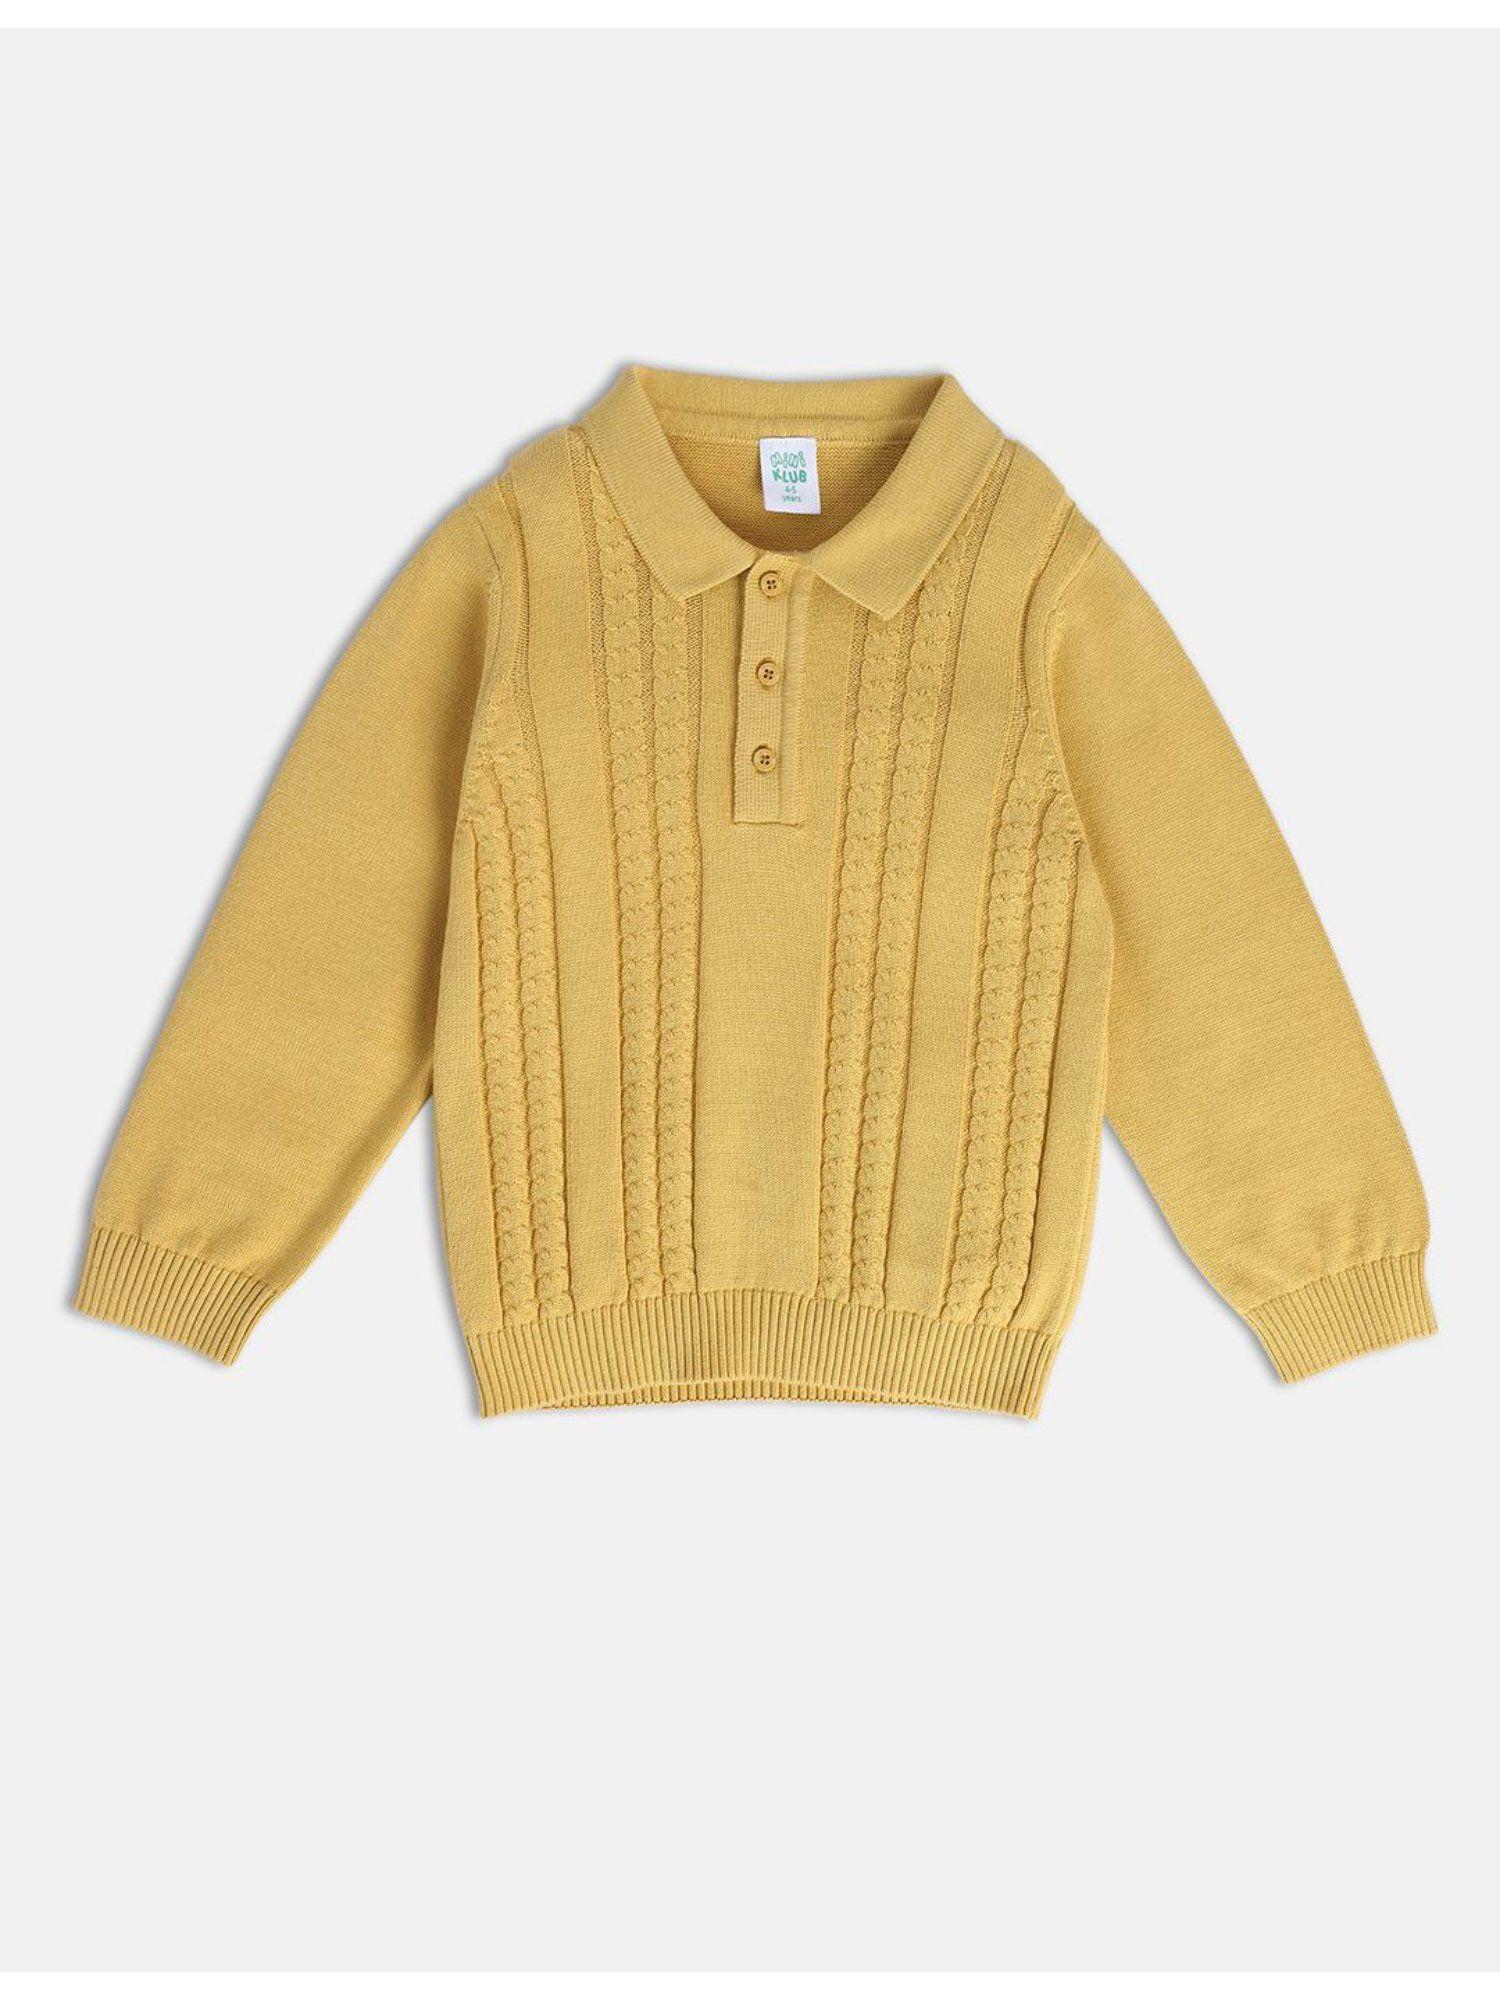 boys mustard sweater